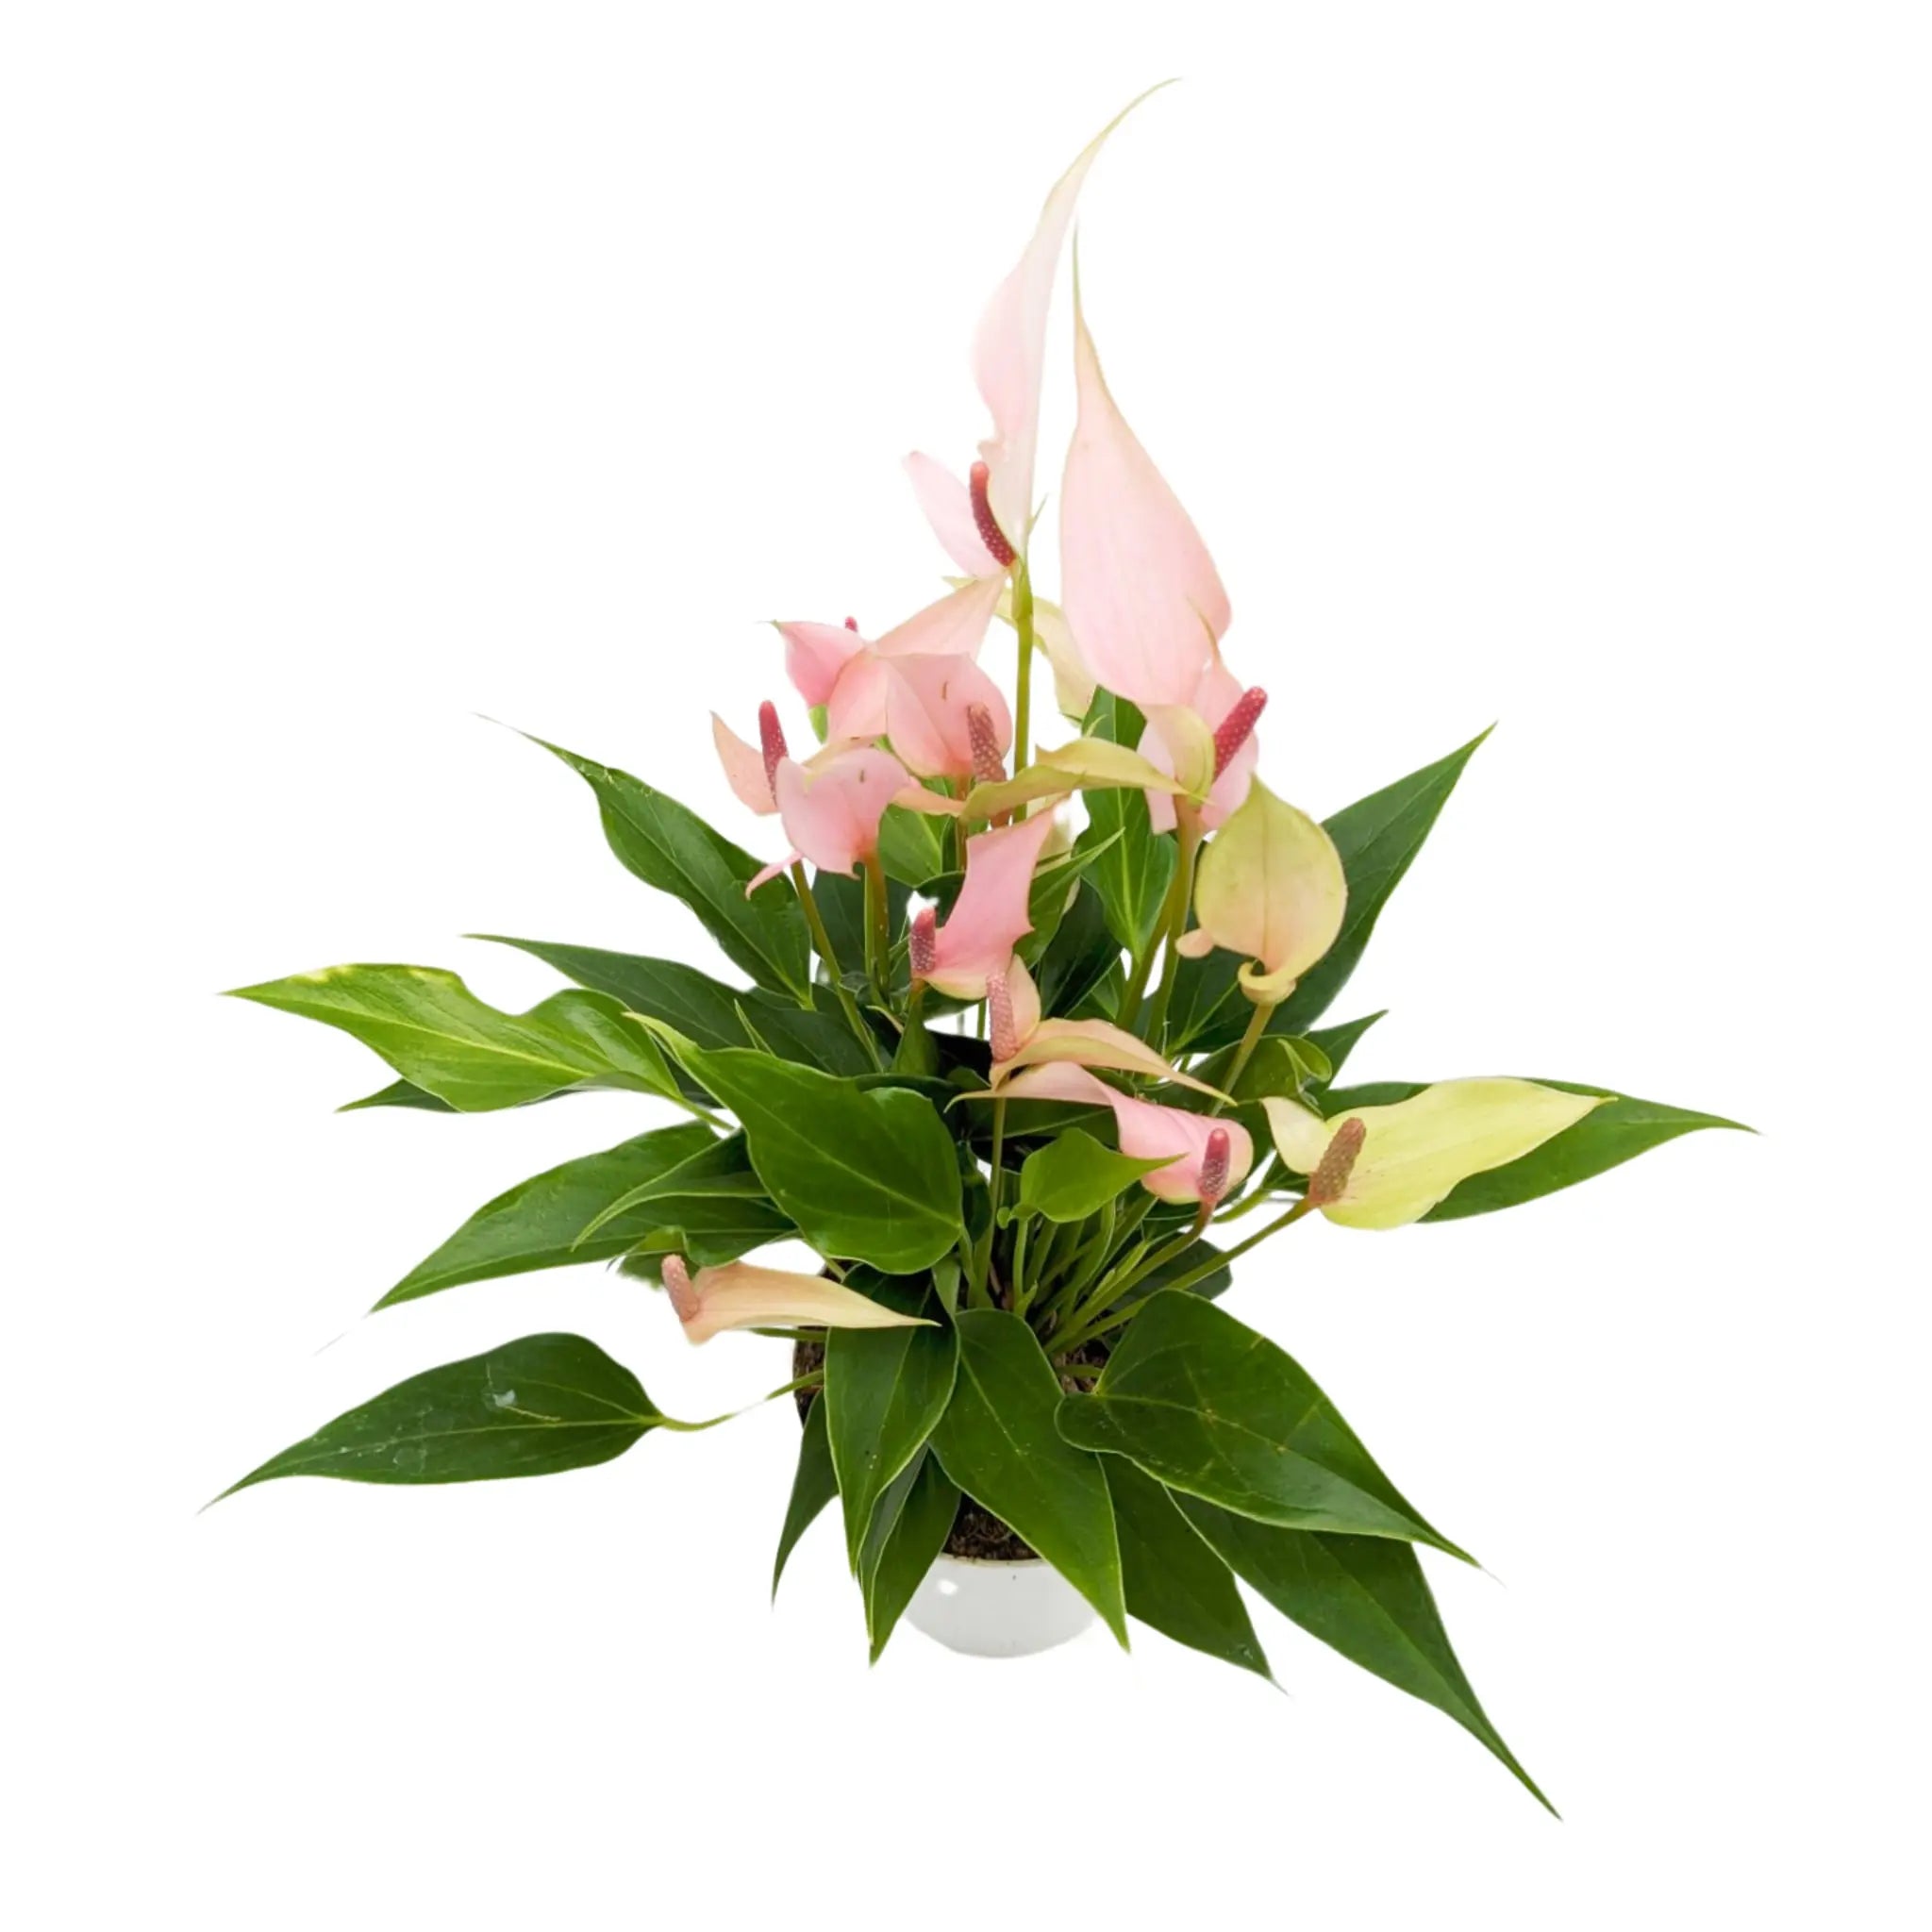 Anthurium andr Champion Lilli - Light Pink Leaf Culture